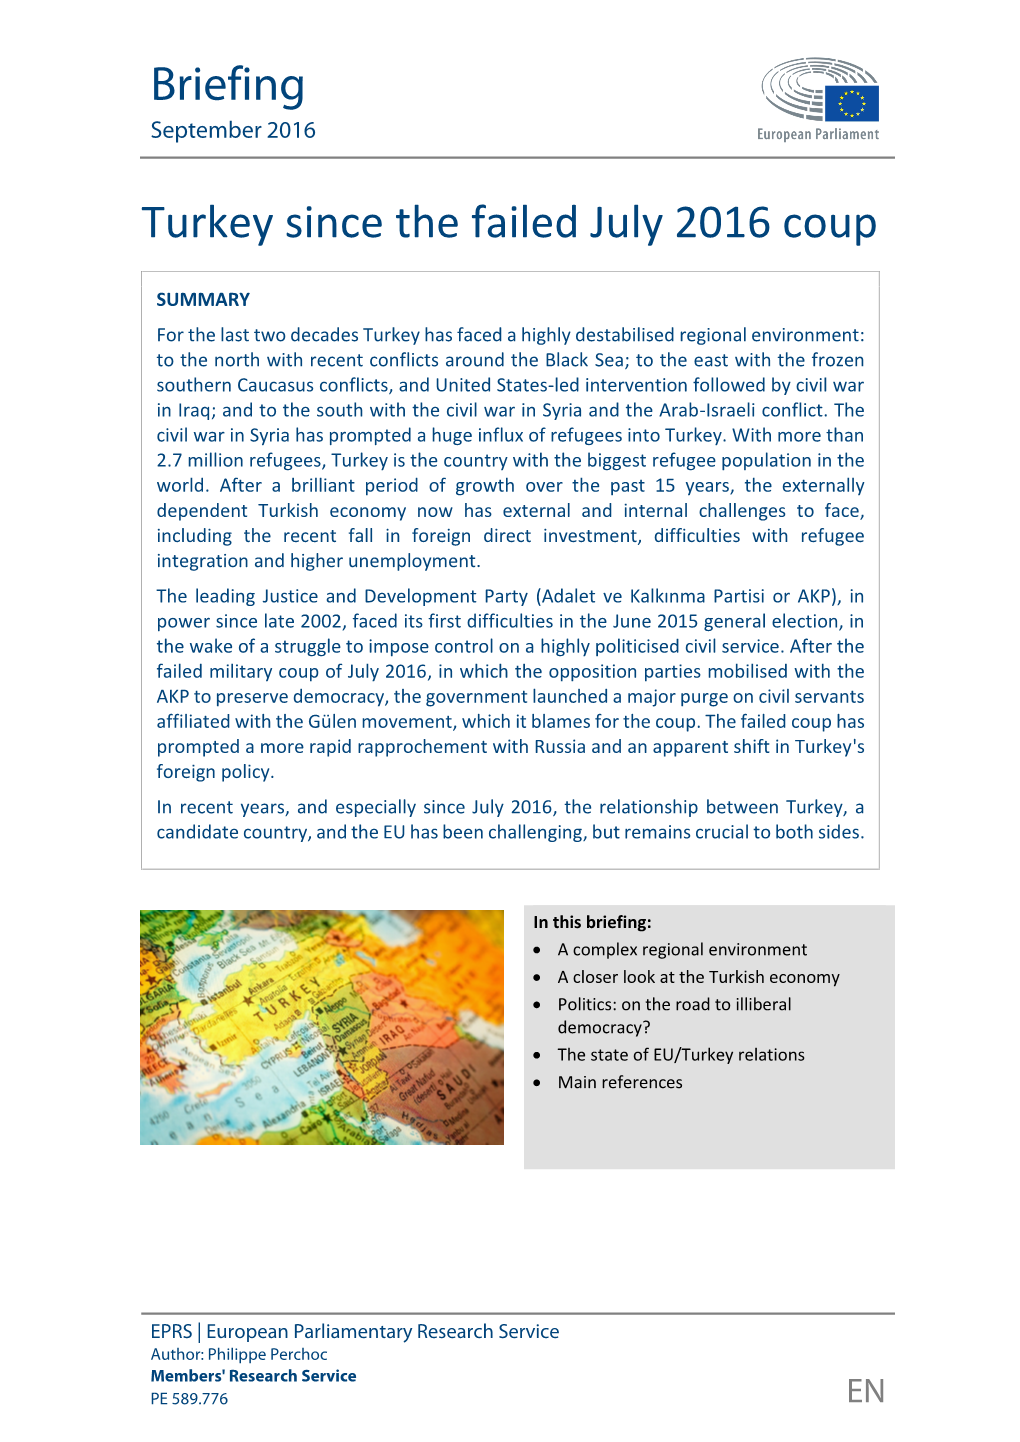 Turkey Since the Failed July 2016 Coup